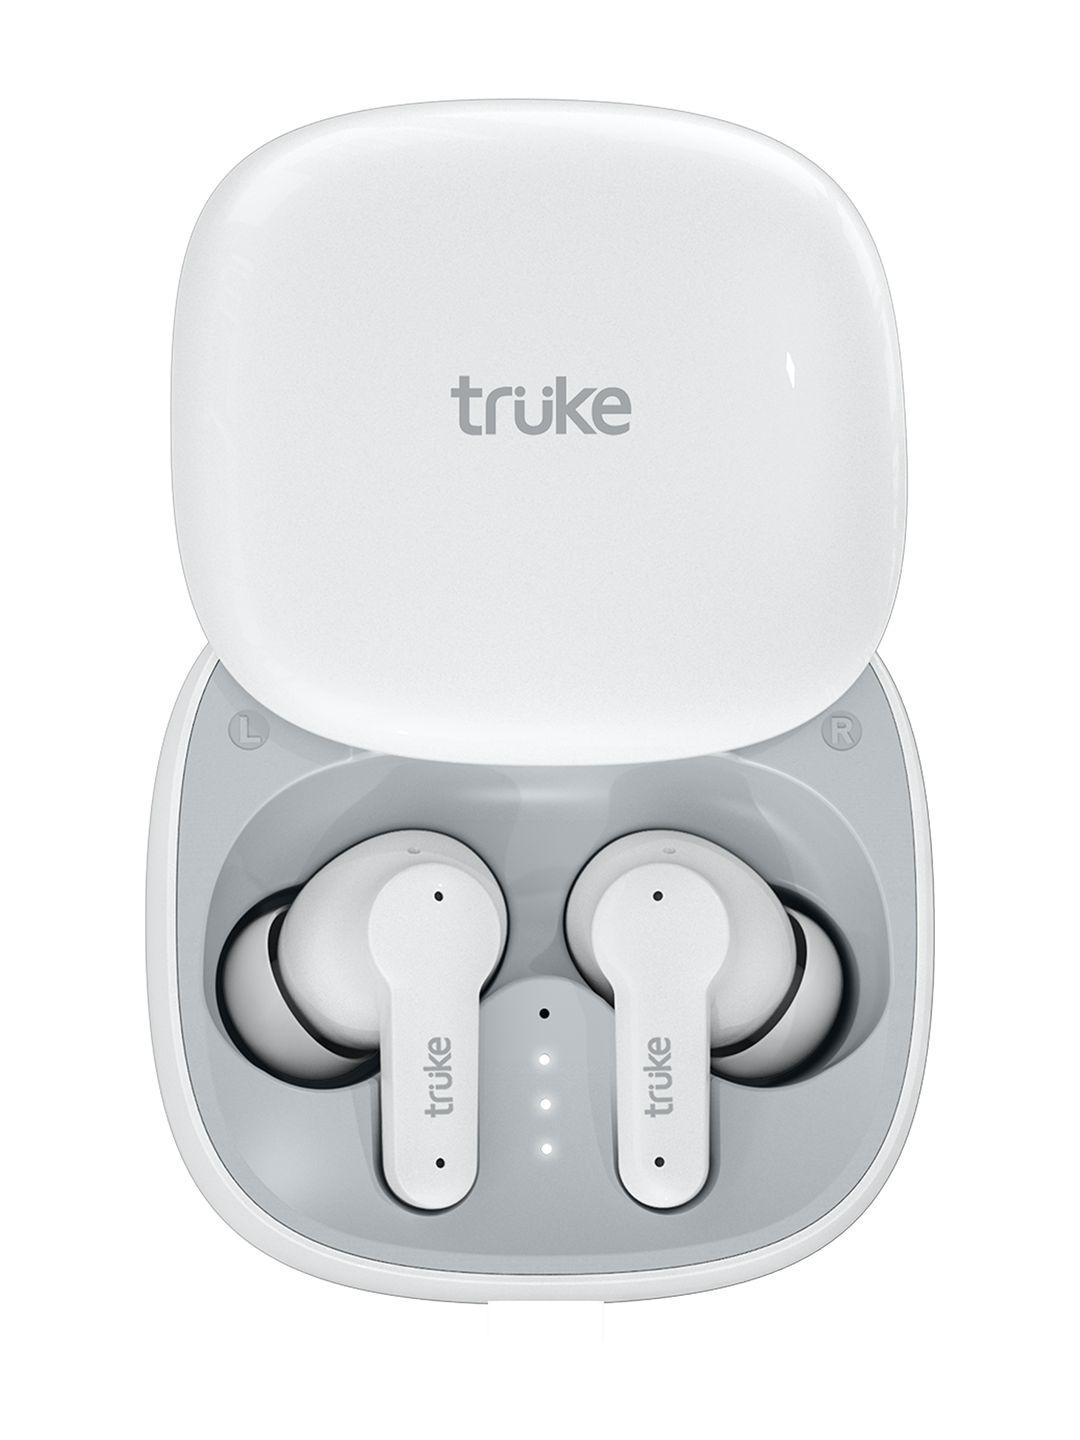 truke buds s2 true wireless earbuds - white